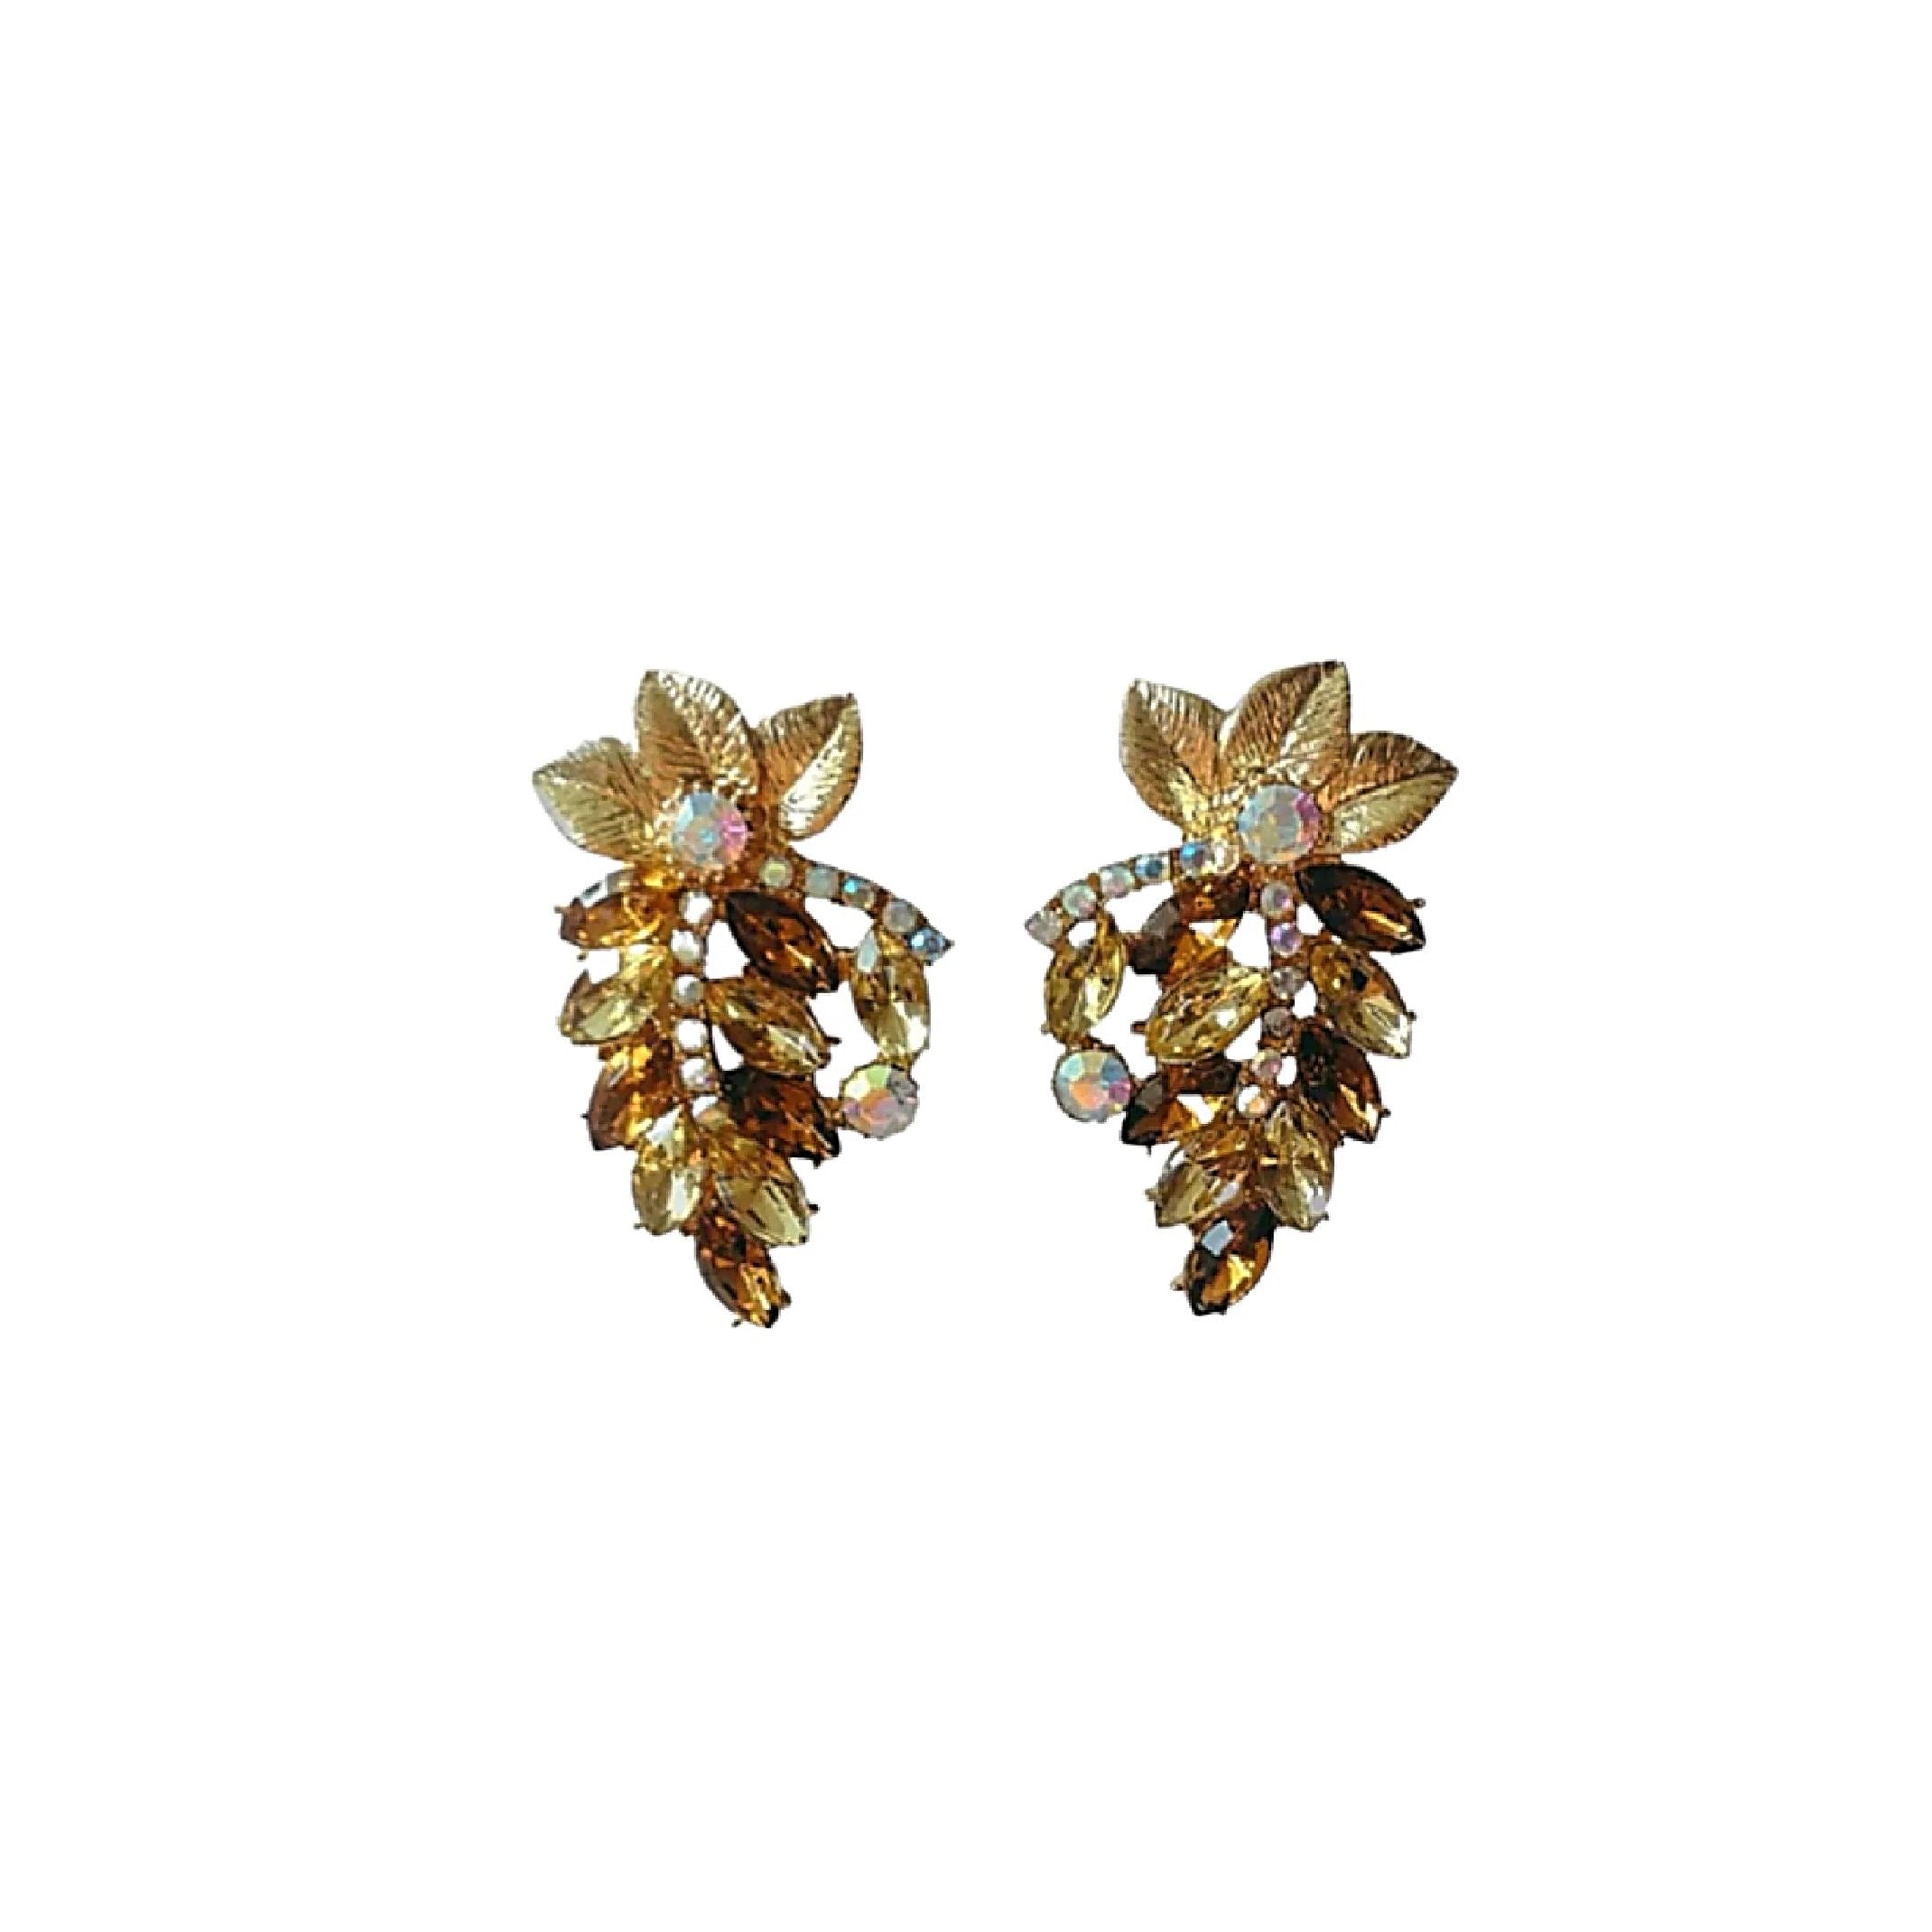 Autumn leaf earrings 